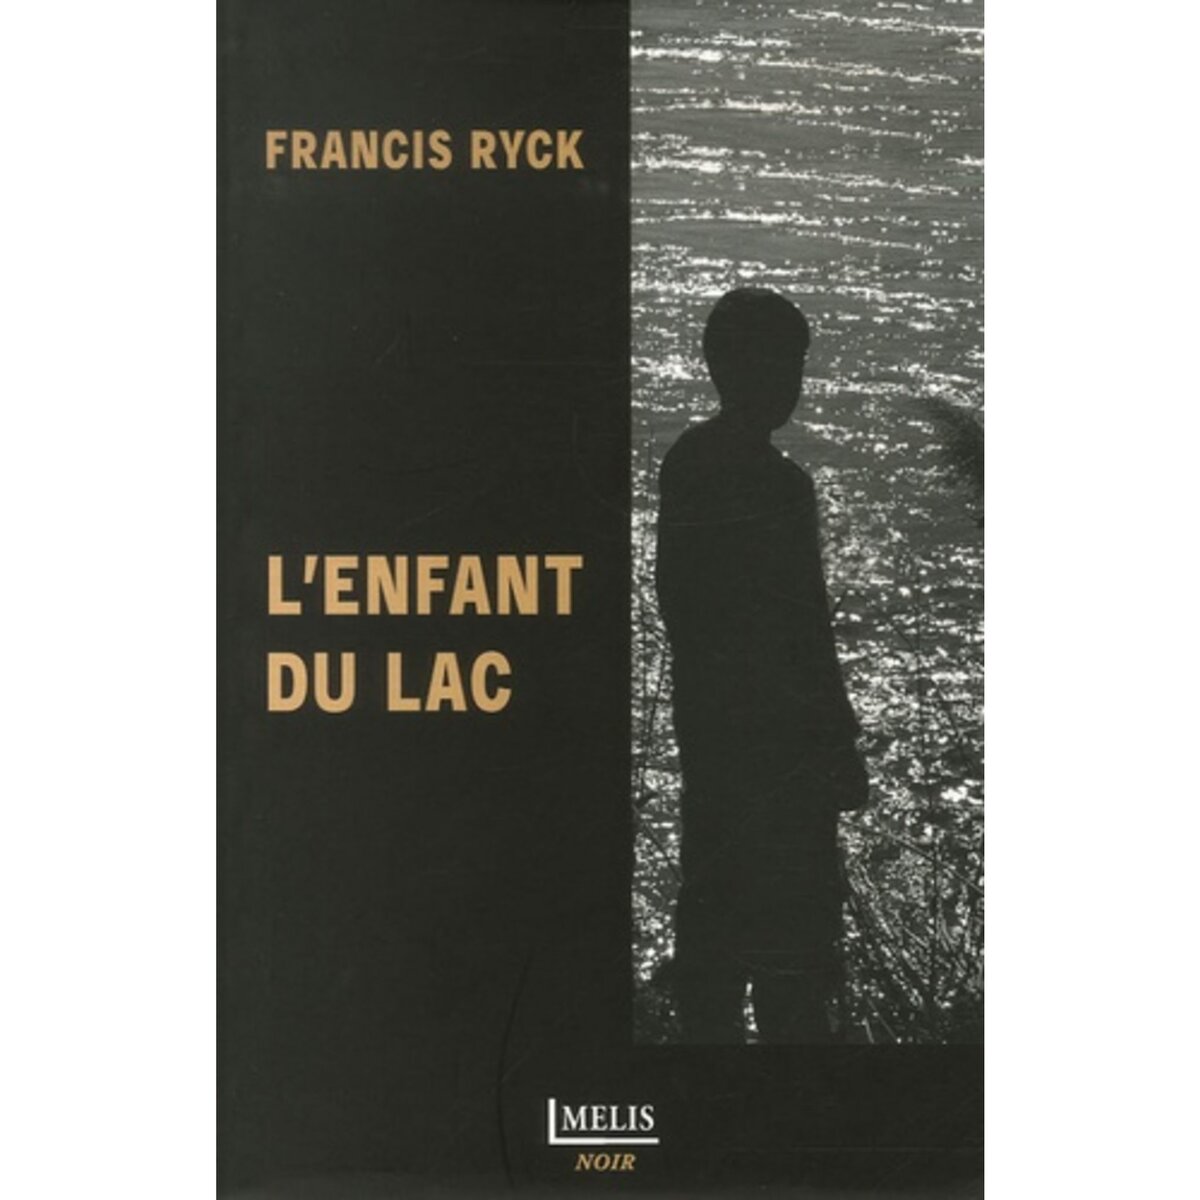  L'ENFANT DU LAC, Ryck Francis